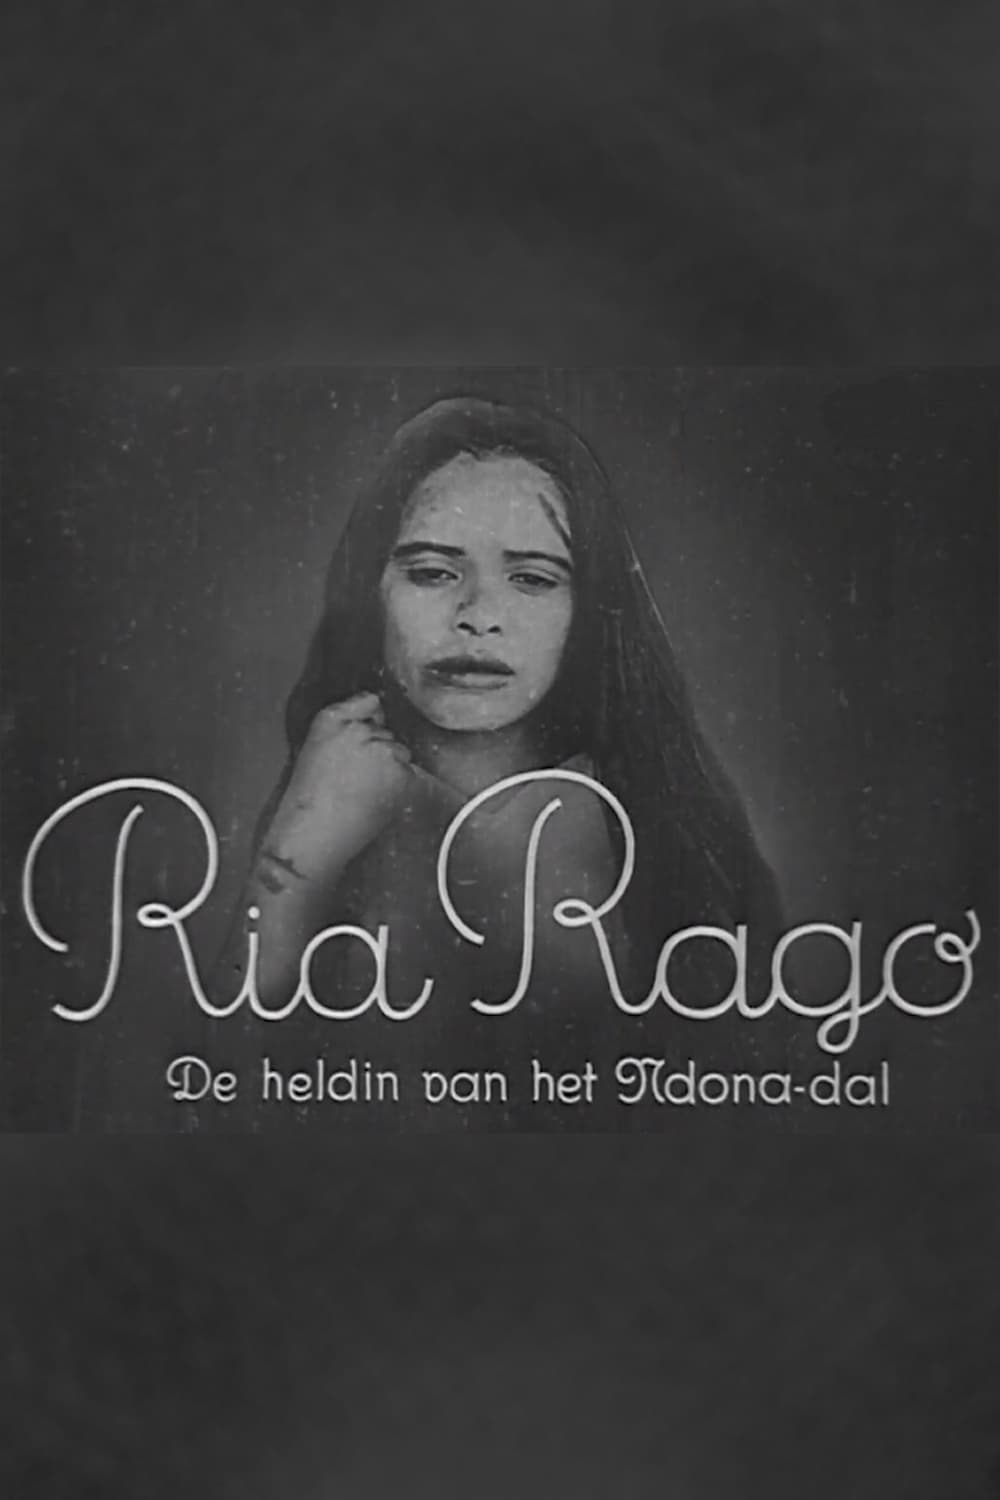 Ria Rago: The Heroine of the Ndona Valley